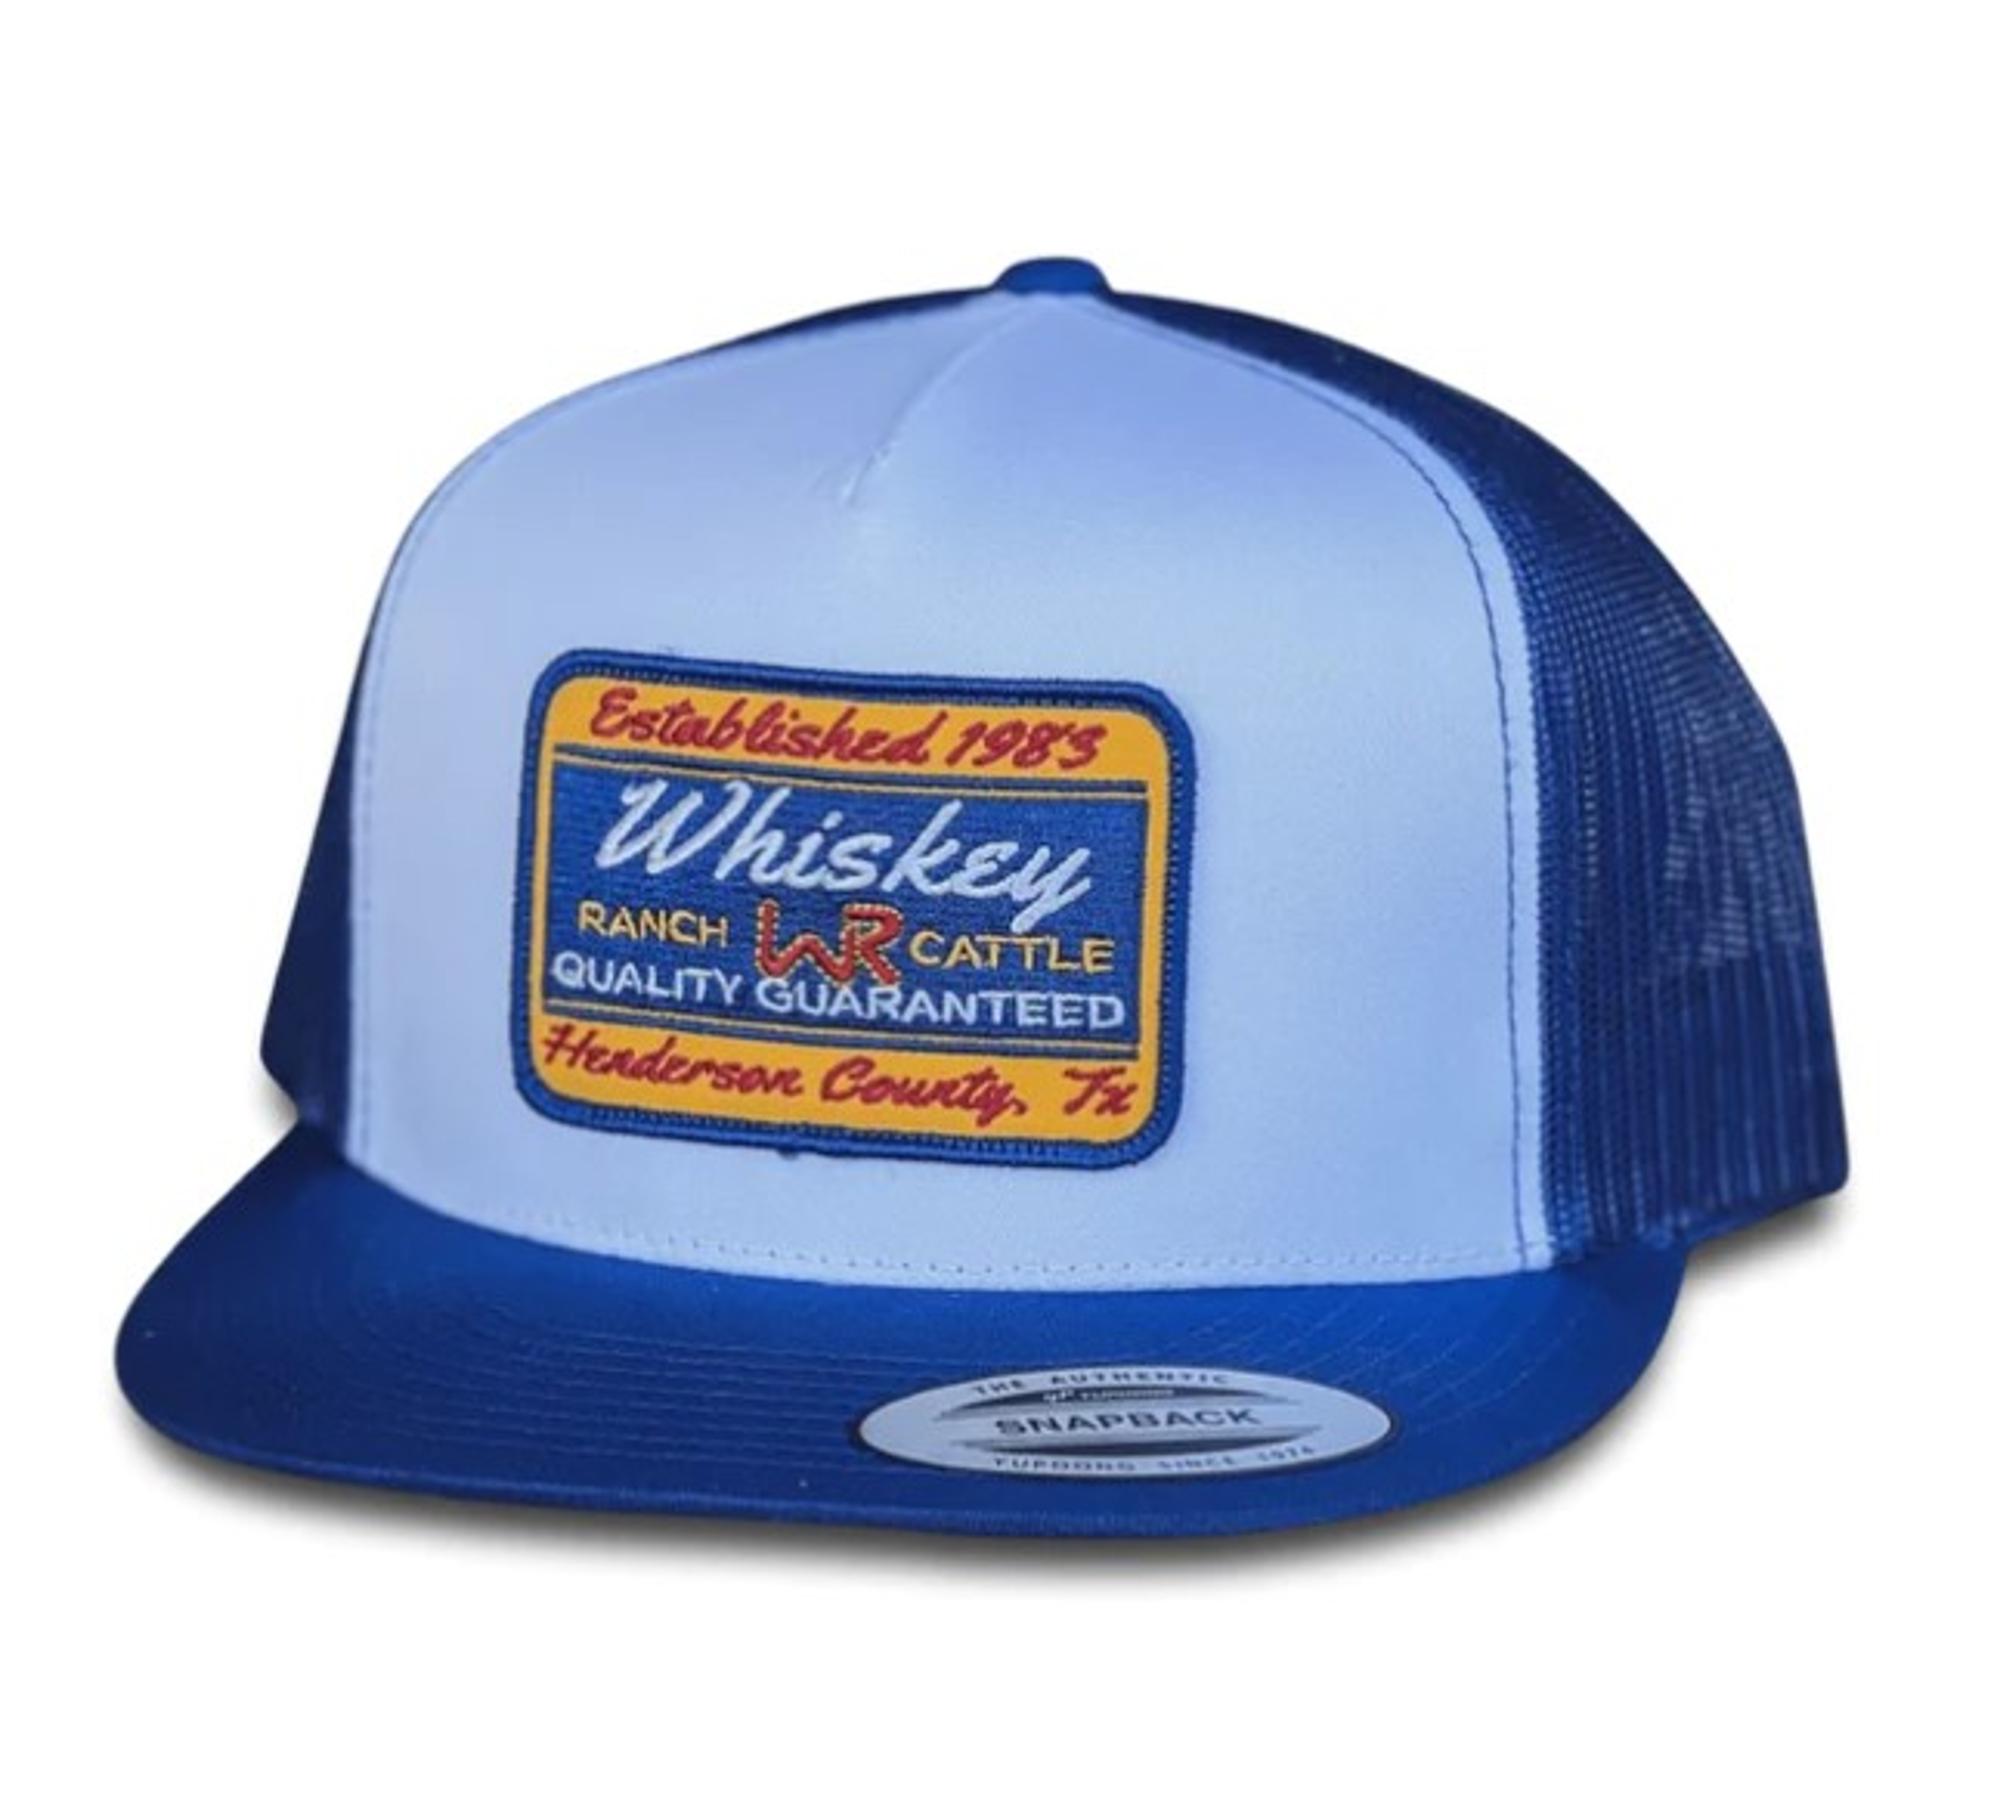 Henderson Trucker Hat